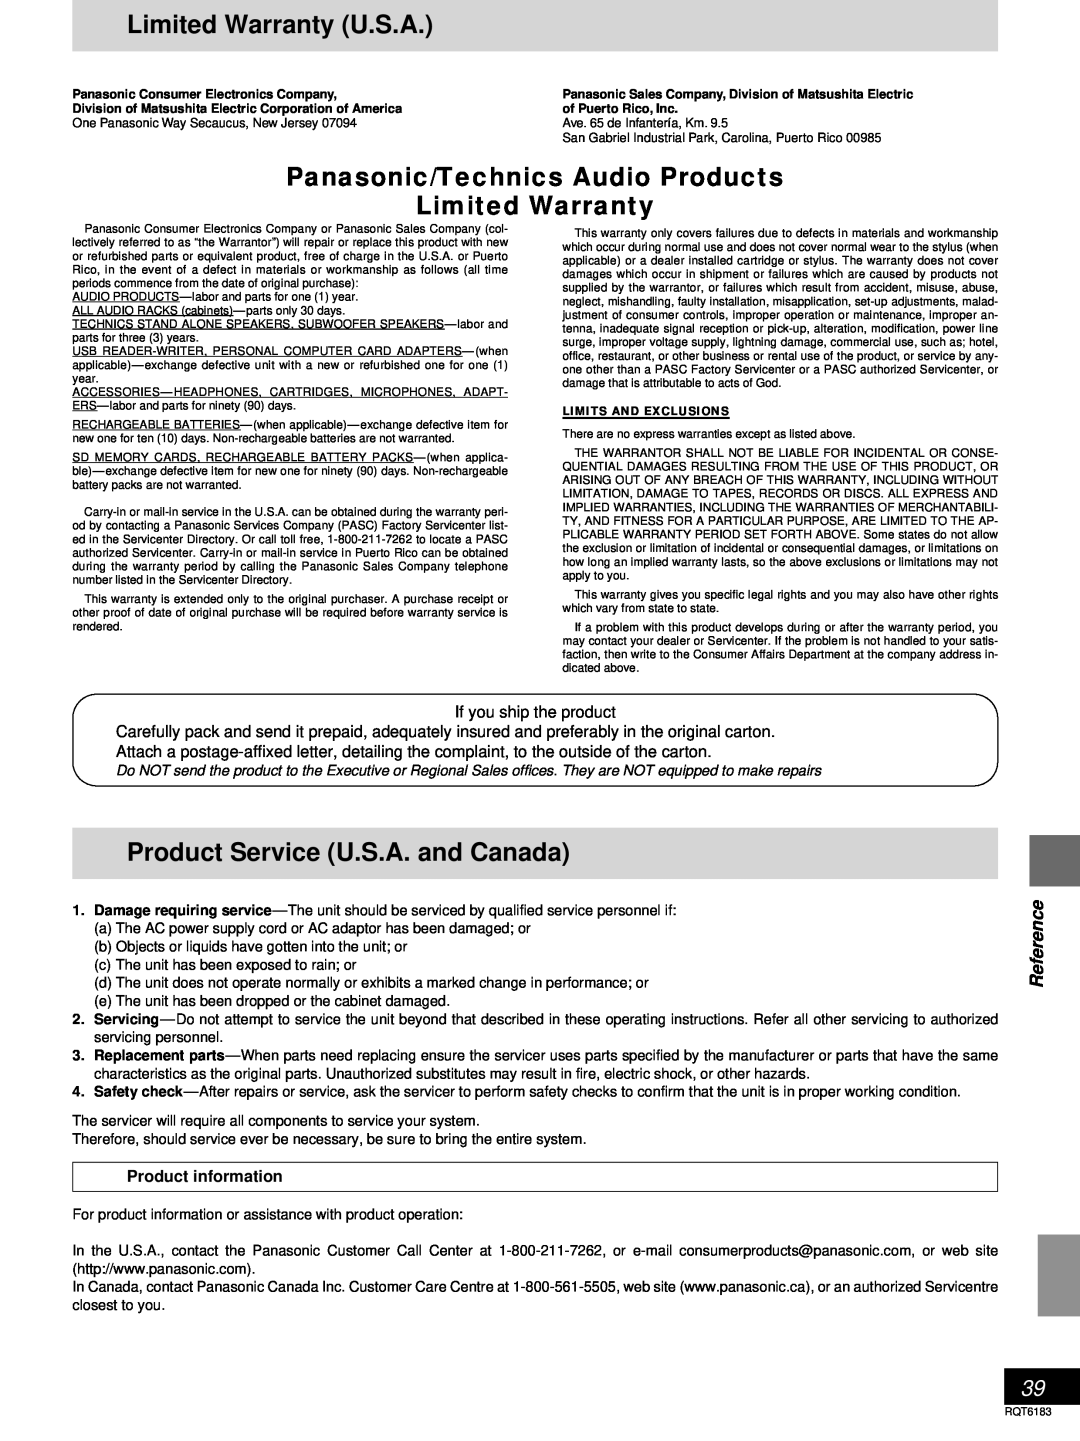 Panasonic SC-HT95 Limited Warranty U.S.A, Panasonic/Technics Audio Products, Product Service U.S.A. and Canada, Reference 